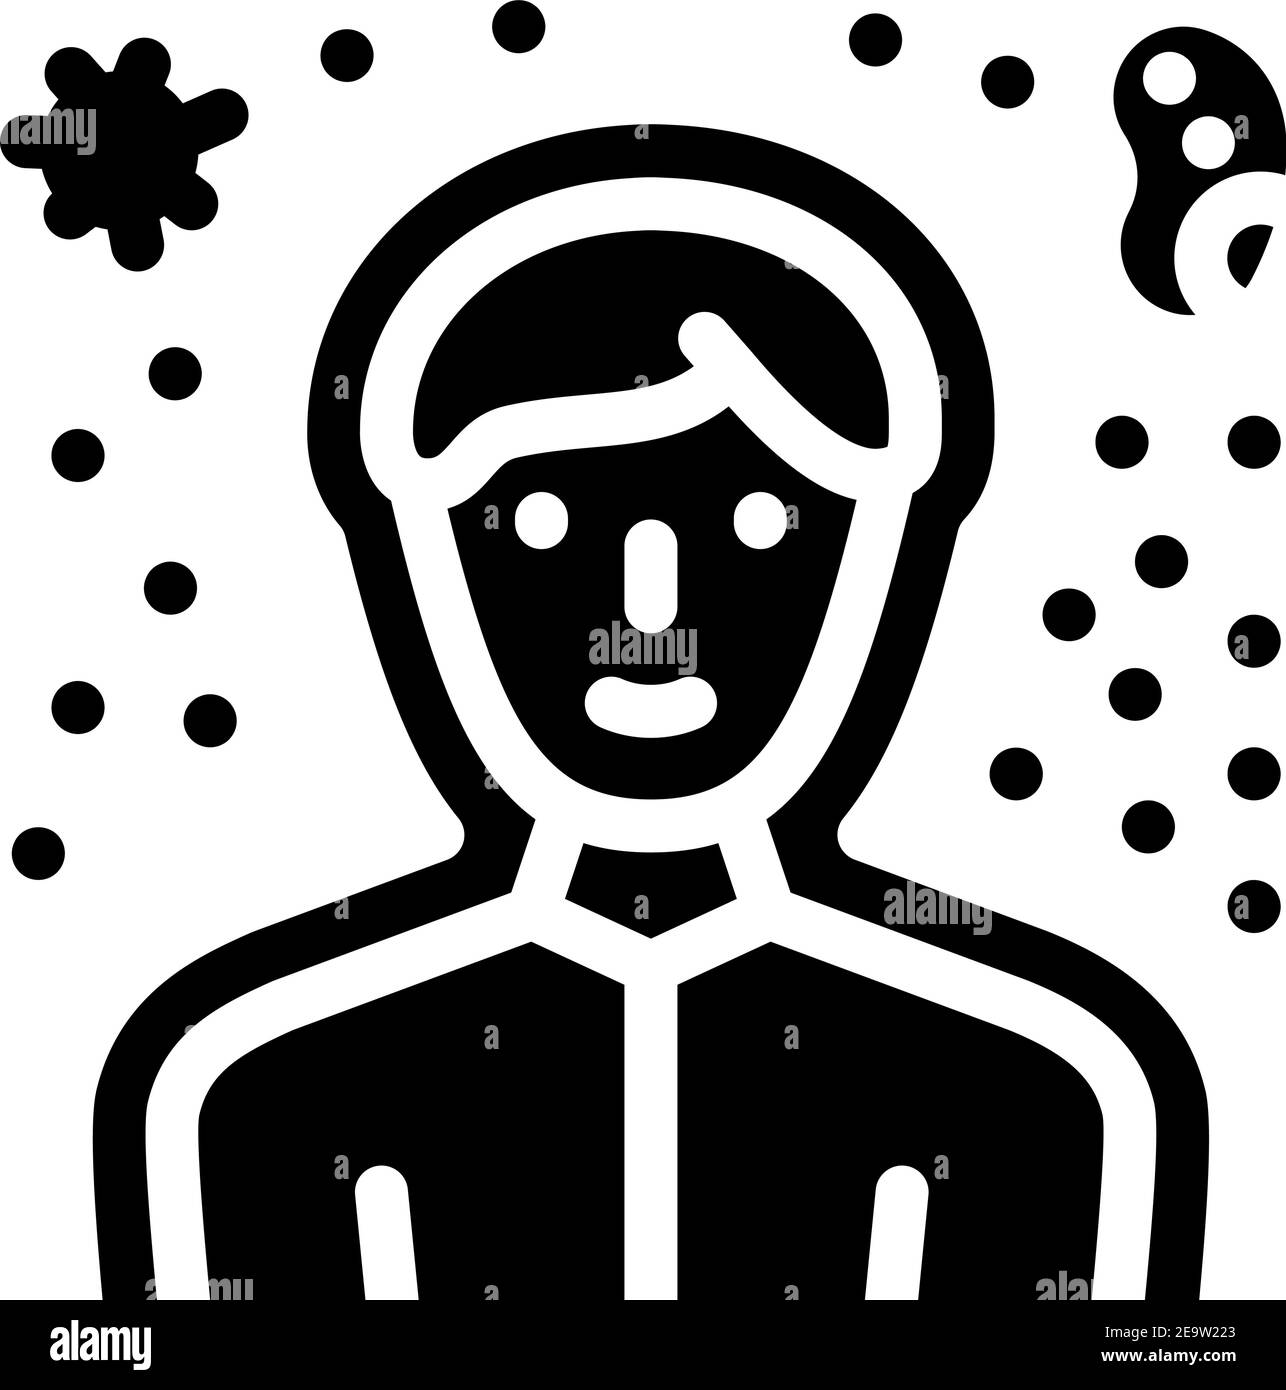 immunity human health glyph icon vector illustration Stock Vector